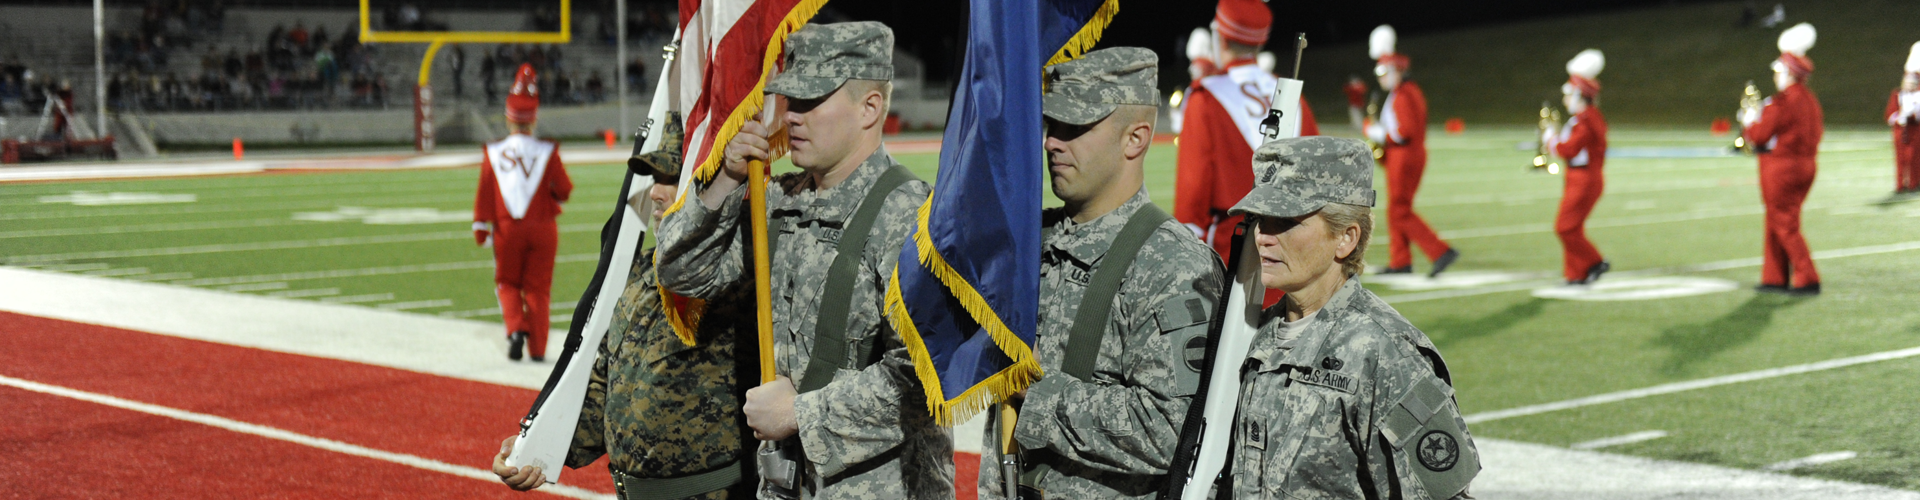 Military members carry flags before a SVSU football game